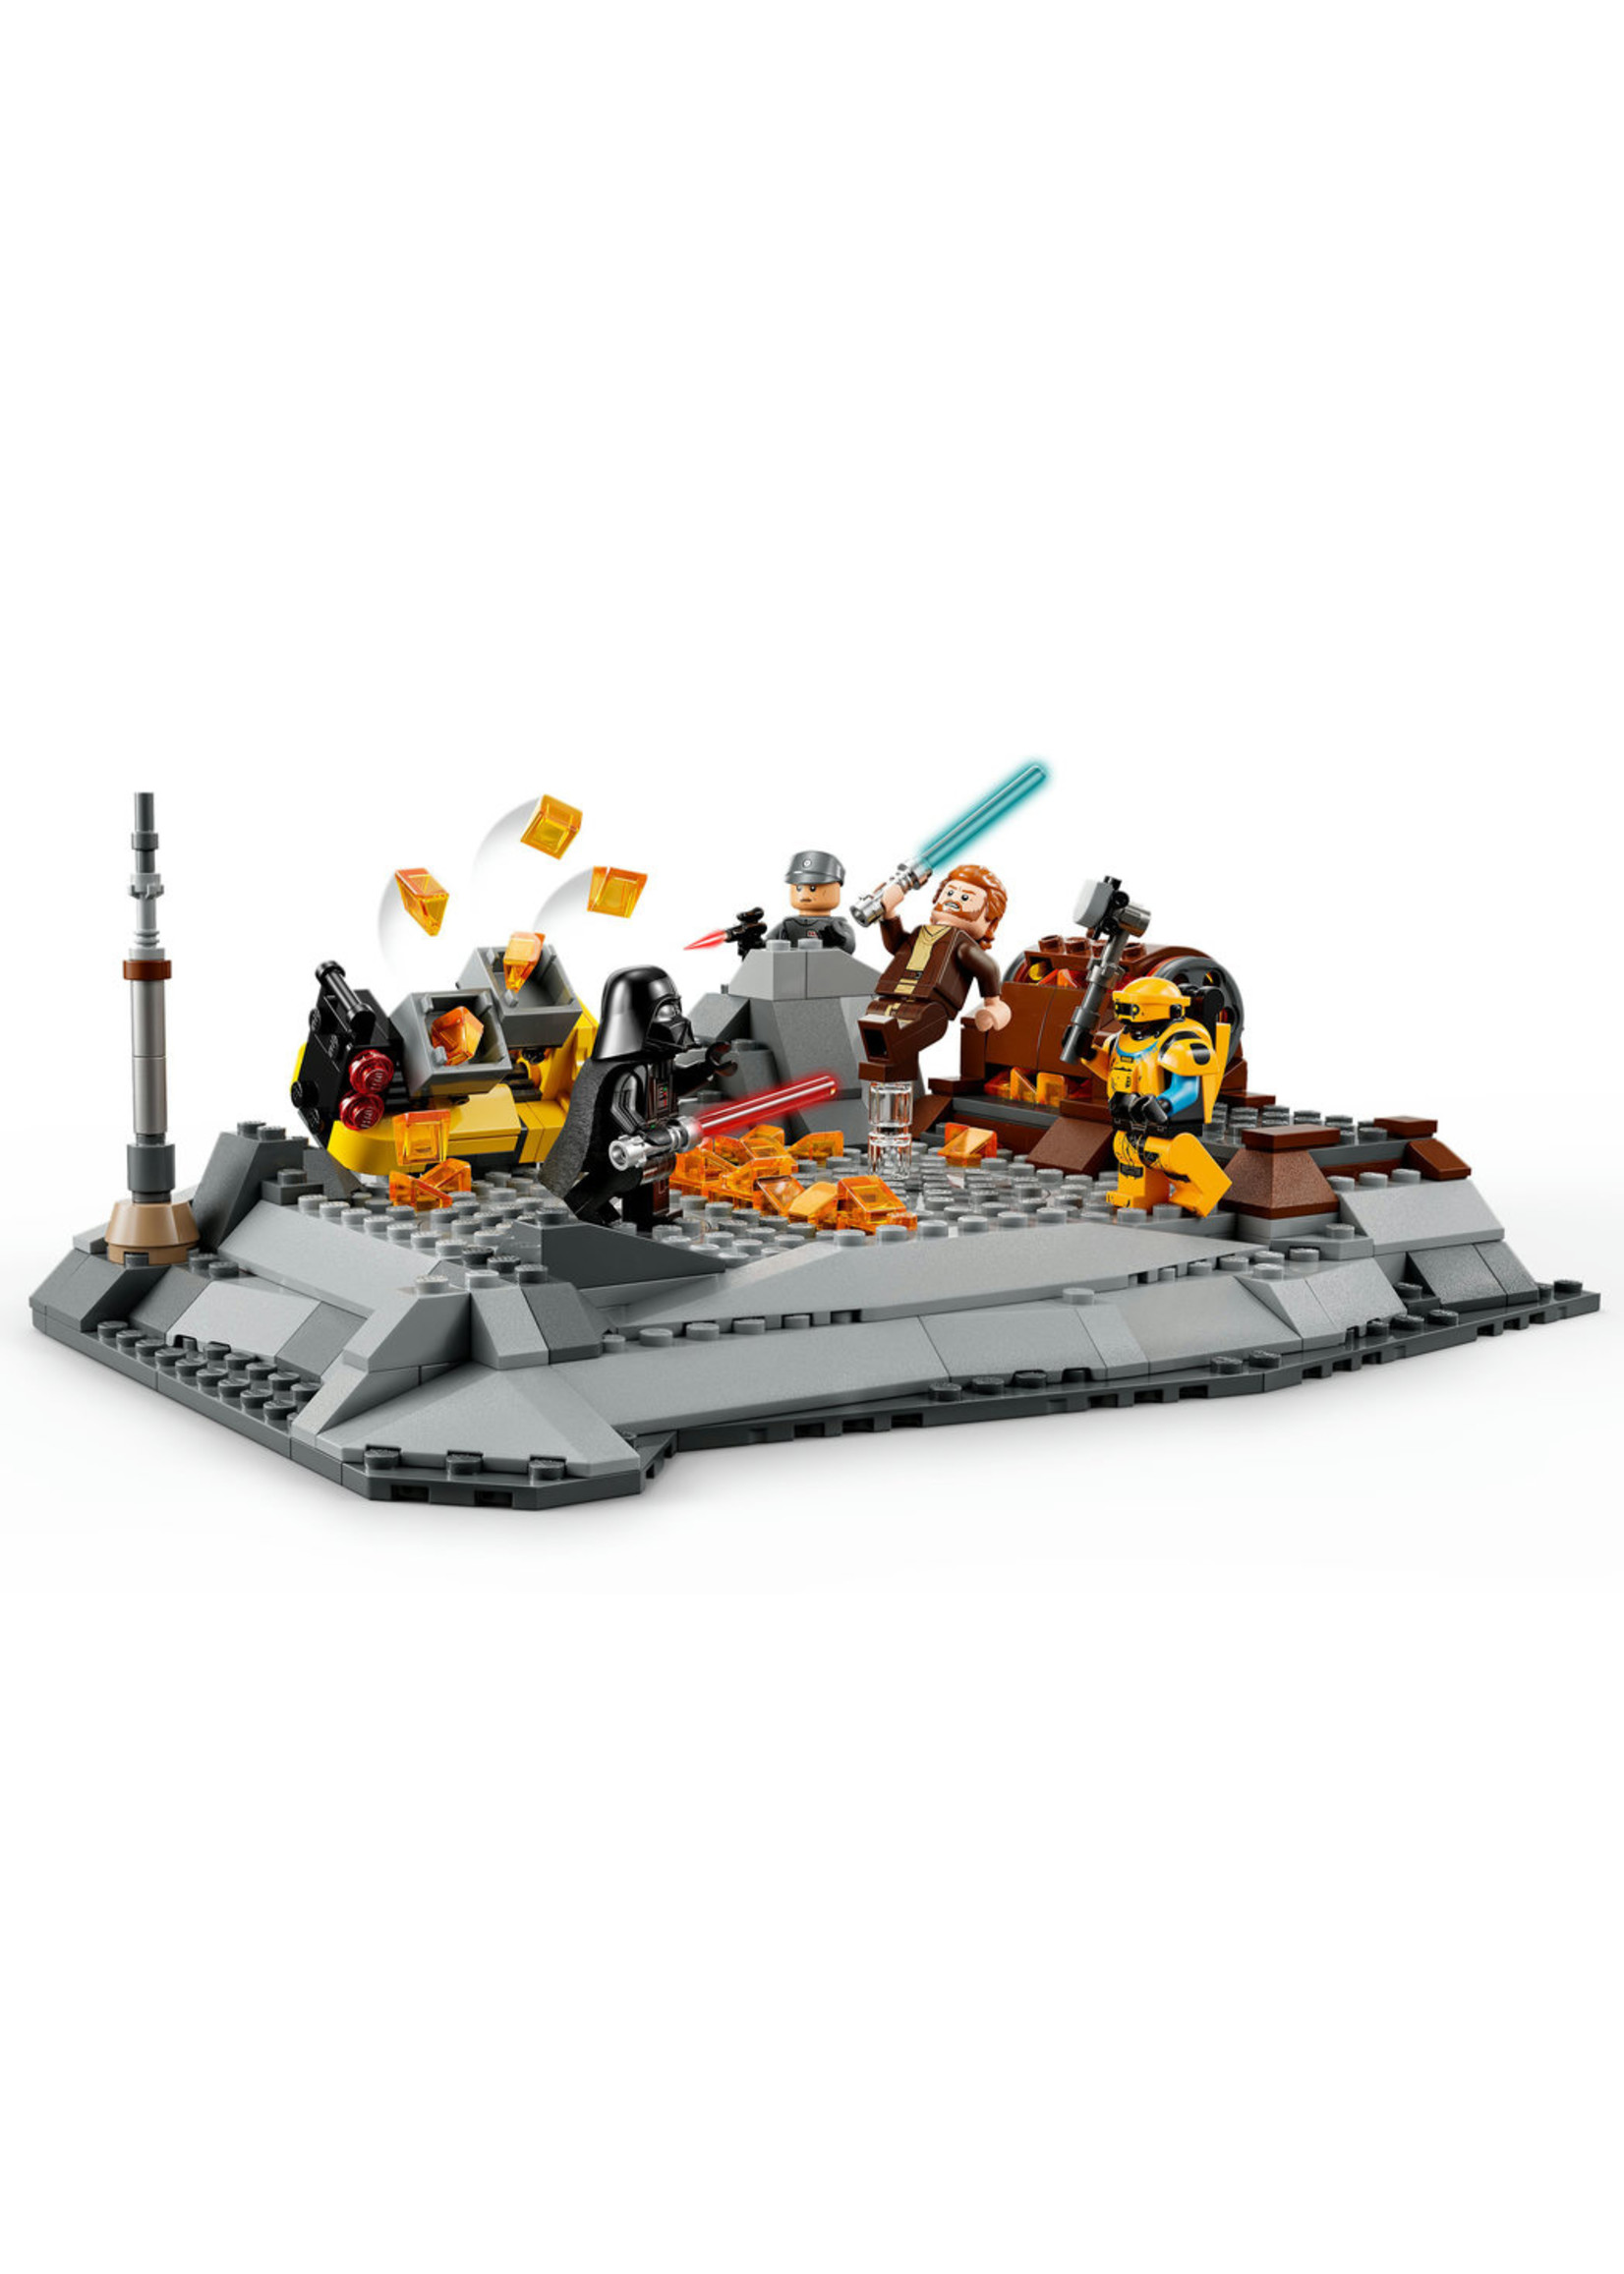 LEGO 75334 - Obi-Wan Kenobi vs Darth Vader